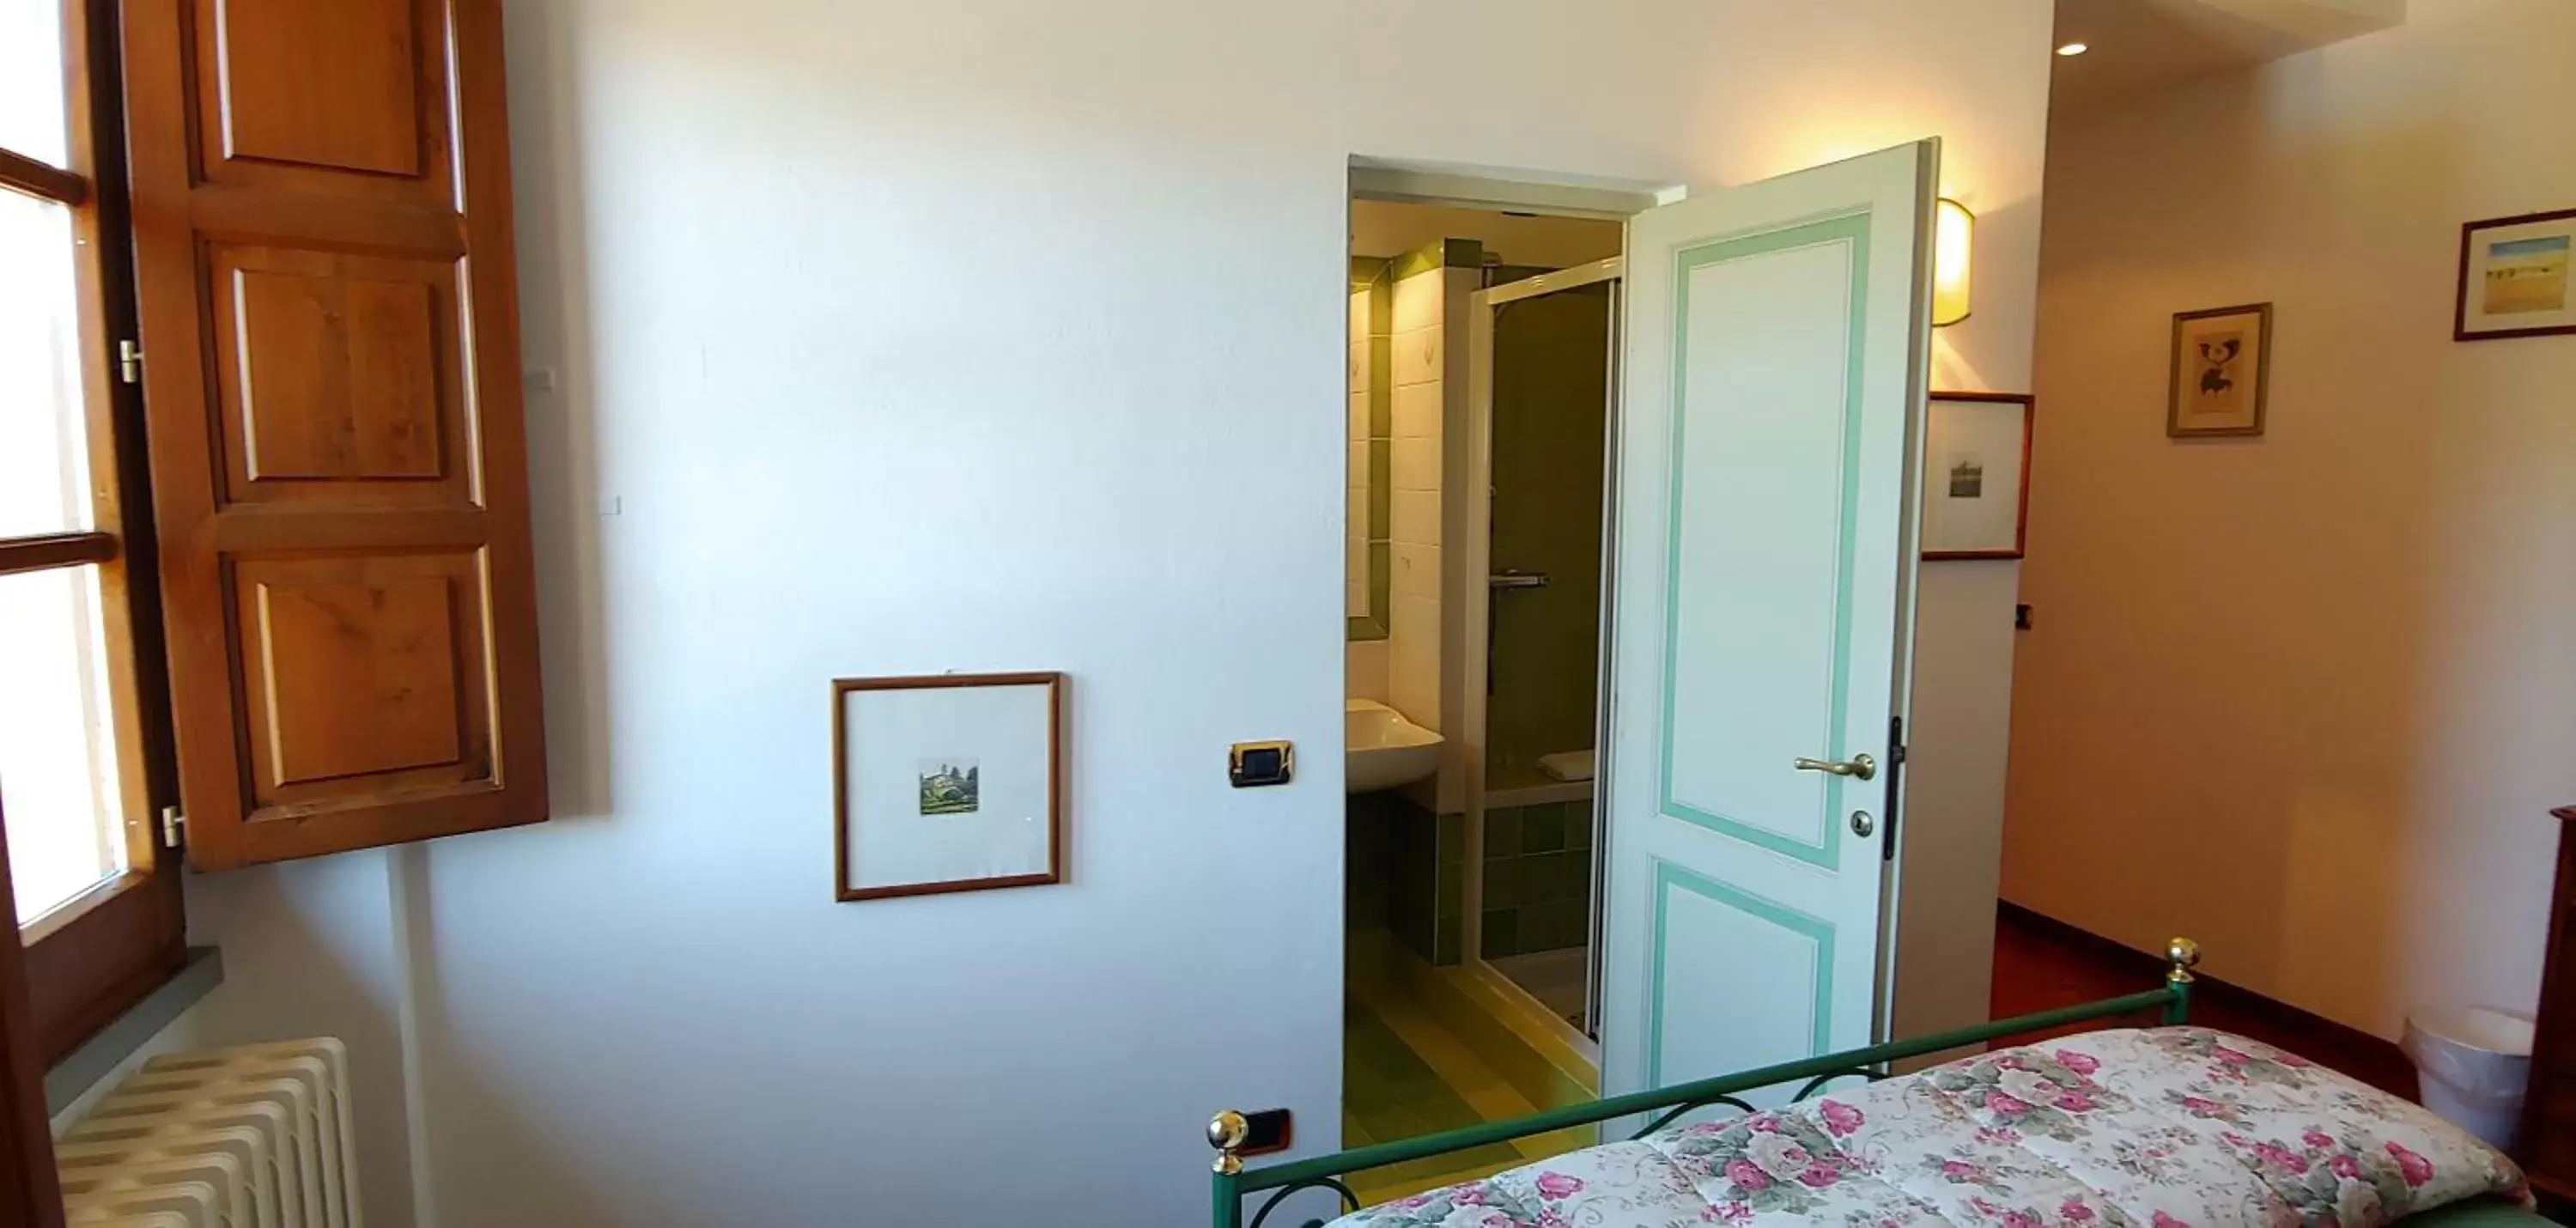 Photo of the whole room, Bathroom in Torrebianca Tuscany